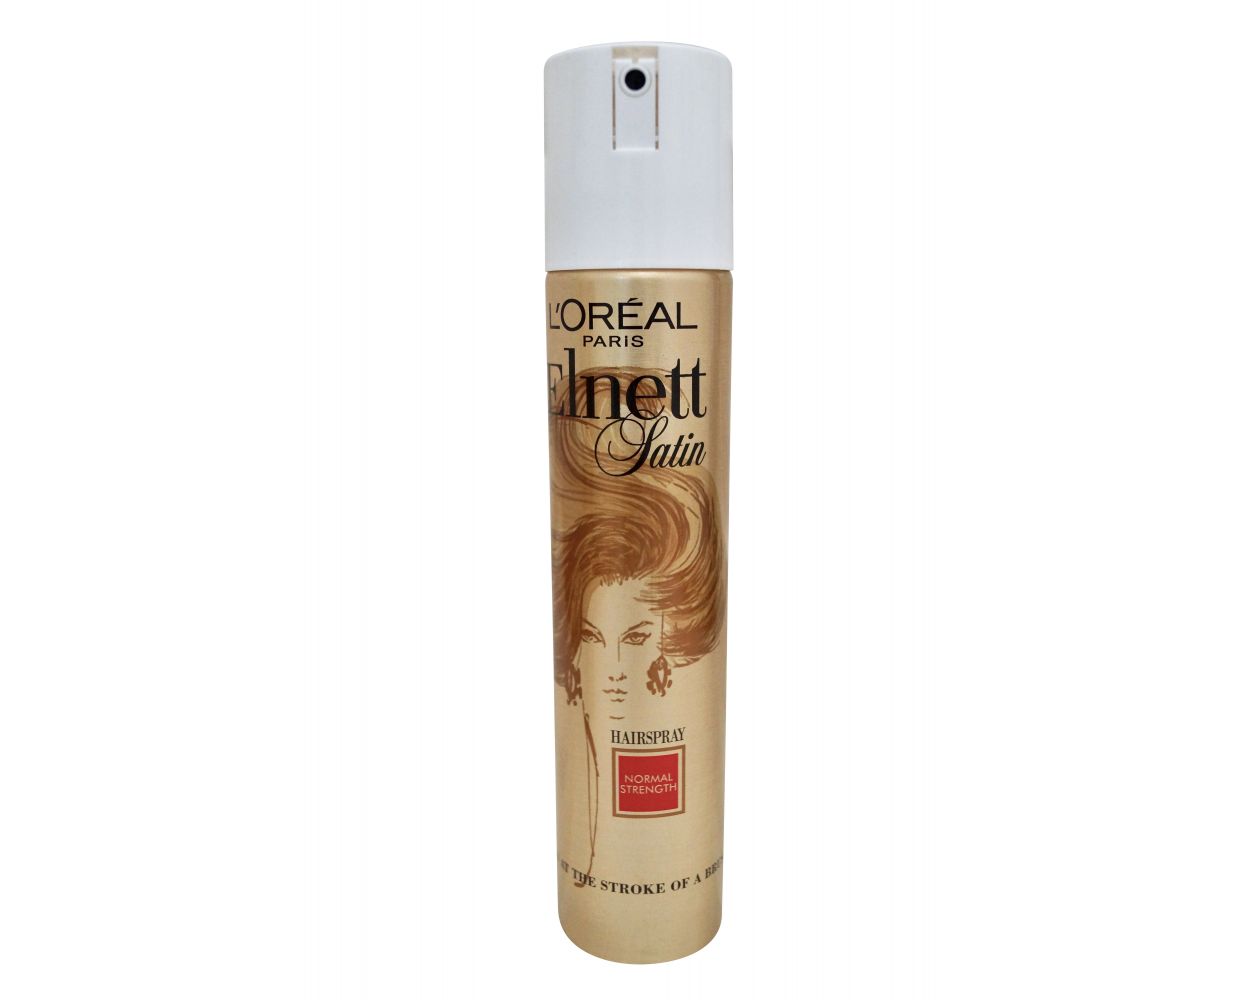 L'Oreal Elnet Satin Hairspray Normal Hold Hair Types | & Finishing - Beautyvice.com